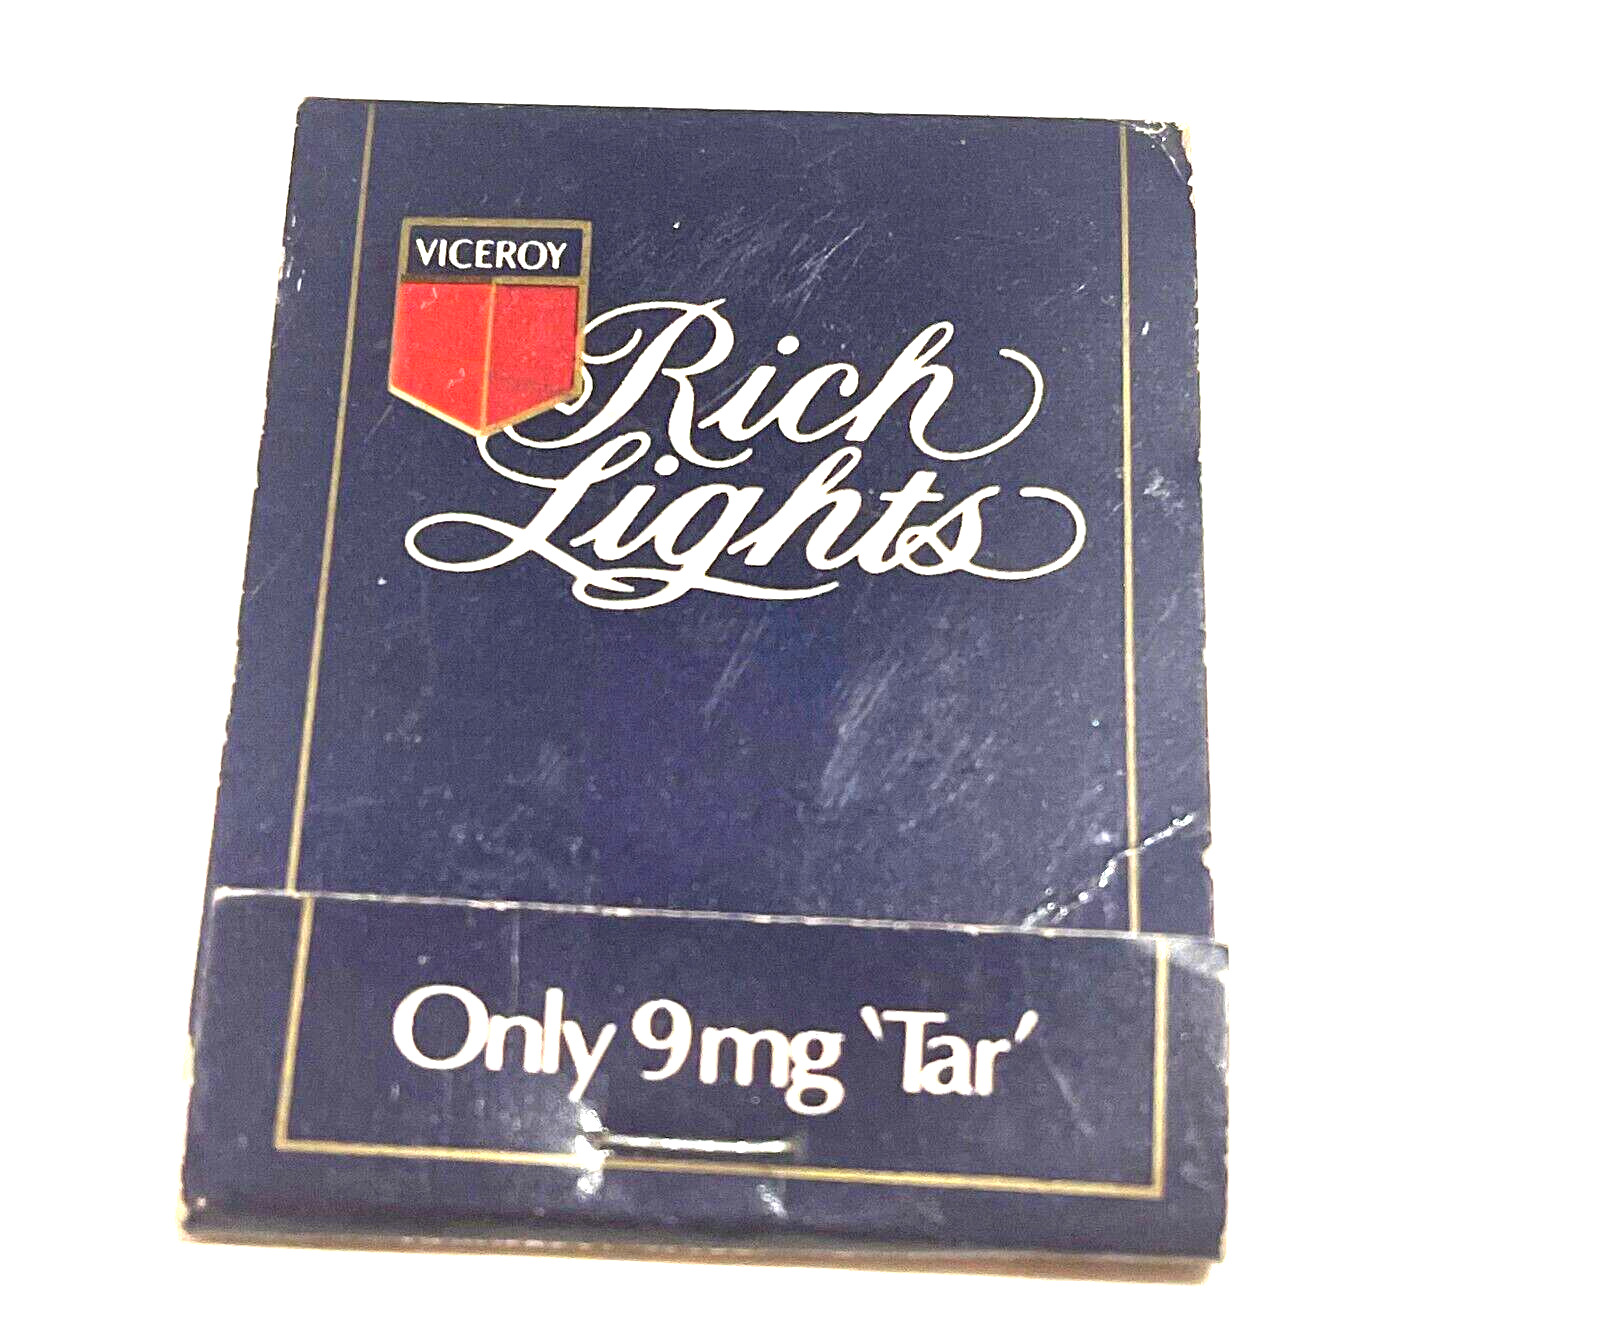 Vintage Matchbook Collectible Ephemera VICEROY RICH LIGHTS Cigarettes